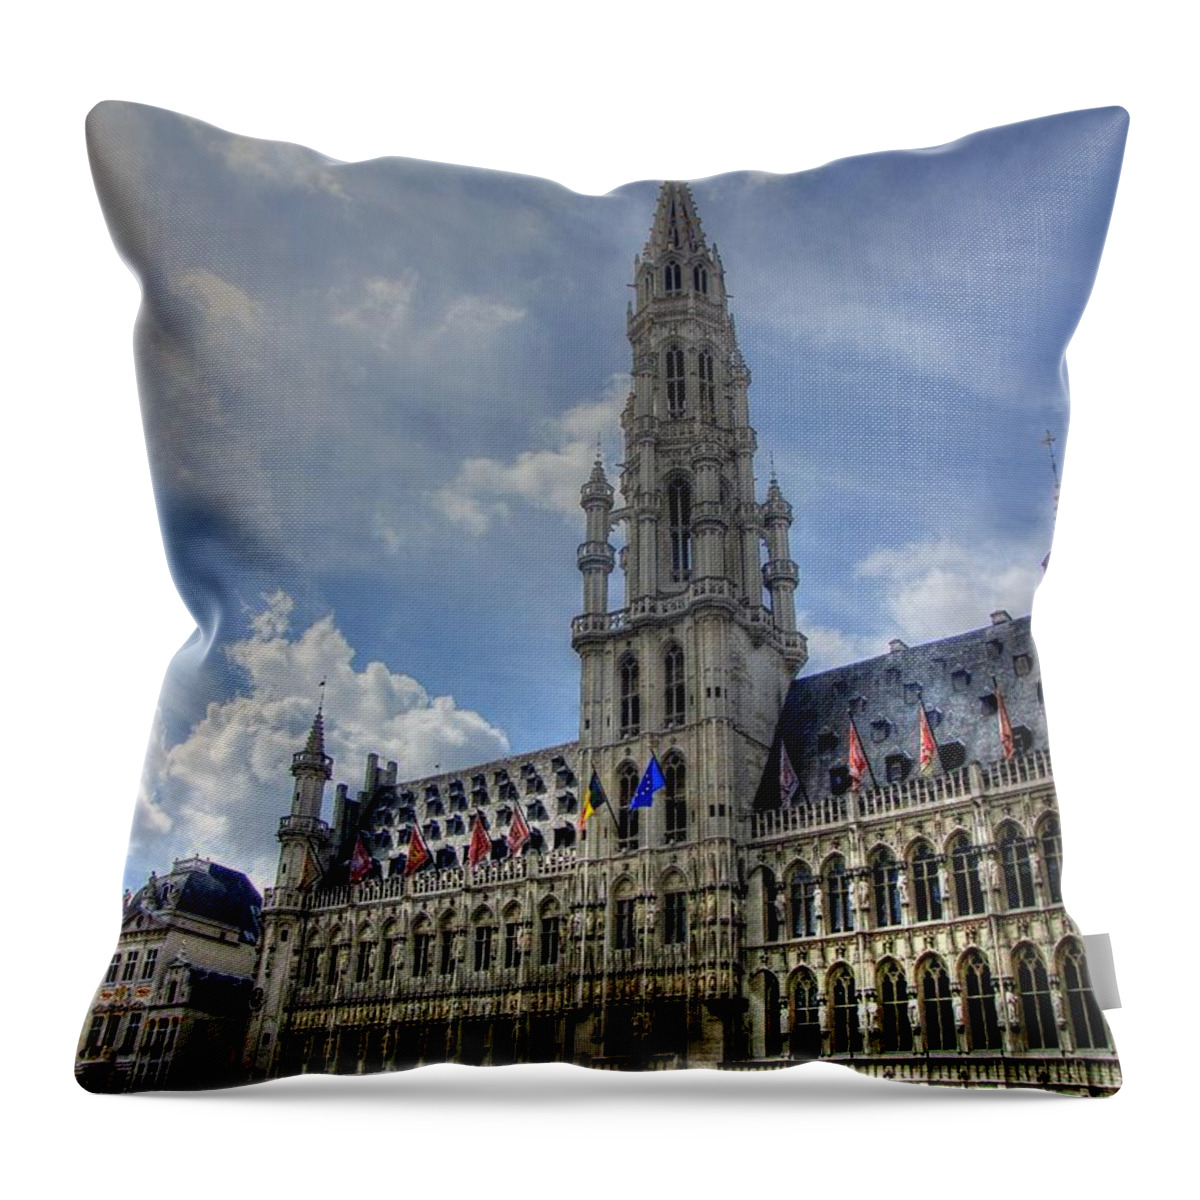 Brussels Belgium Throw Pillow featuring the photograph Brussels BELGIUM by Paul James Bannerman